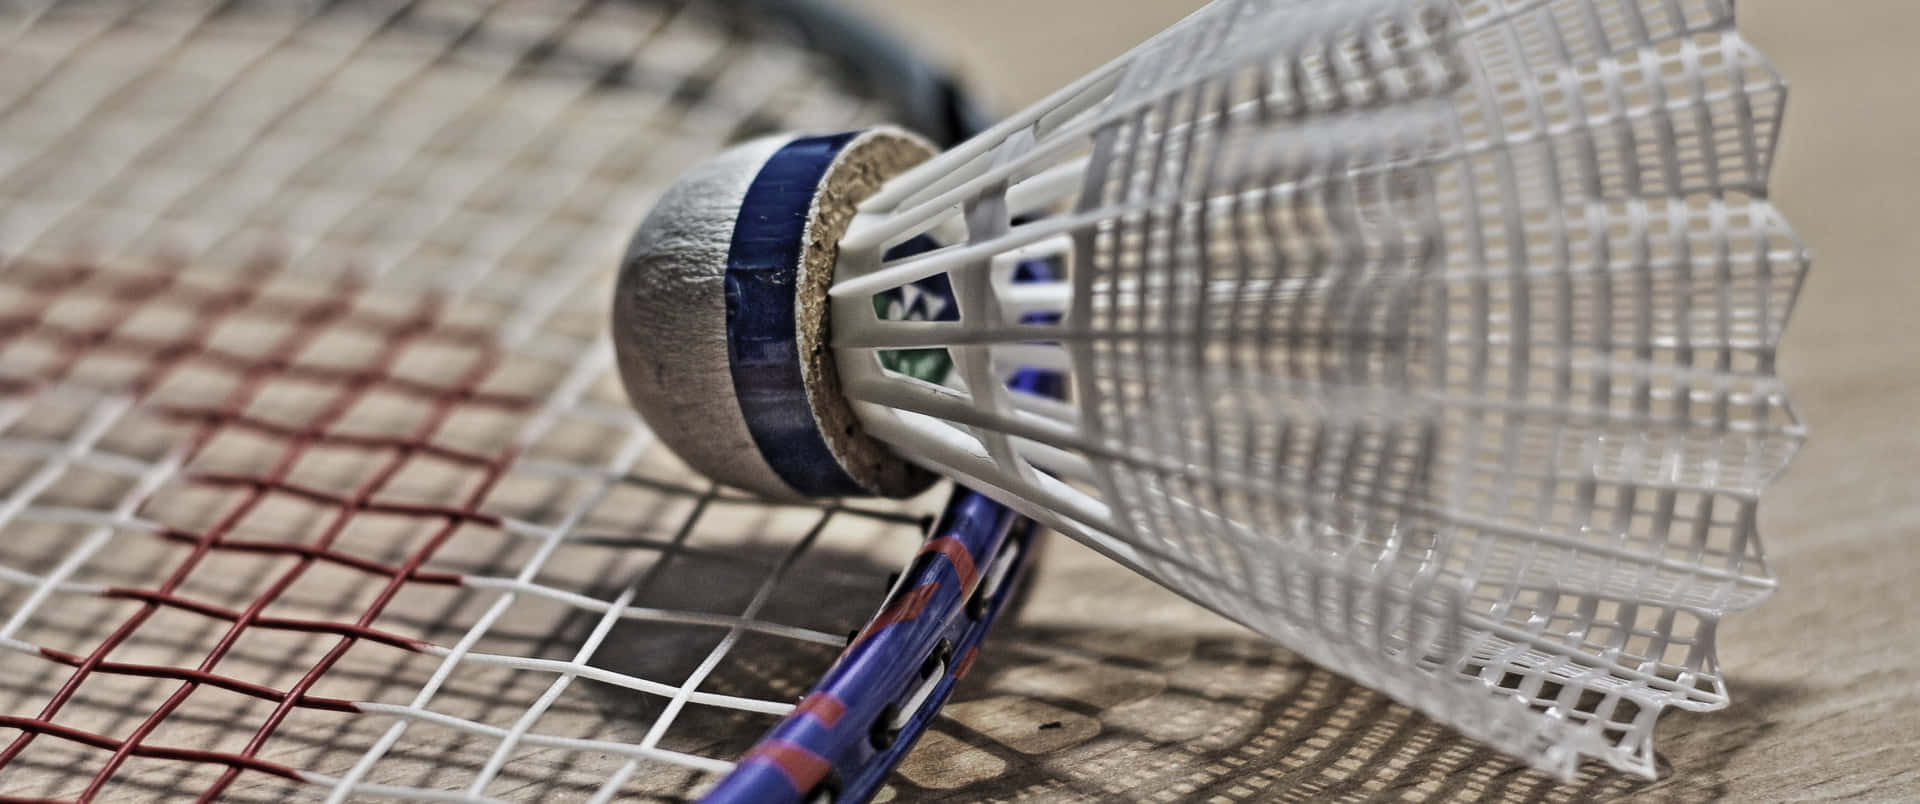 Enprofessionell Badmintonmatch Visas I Skarp 3440x1440p Kvalitet.